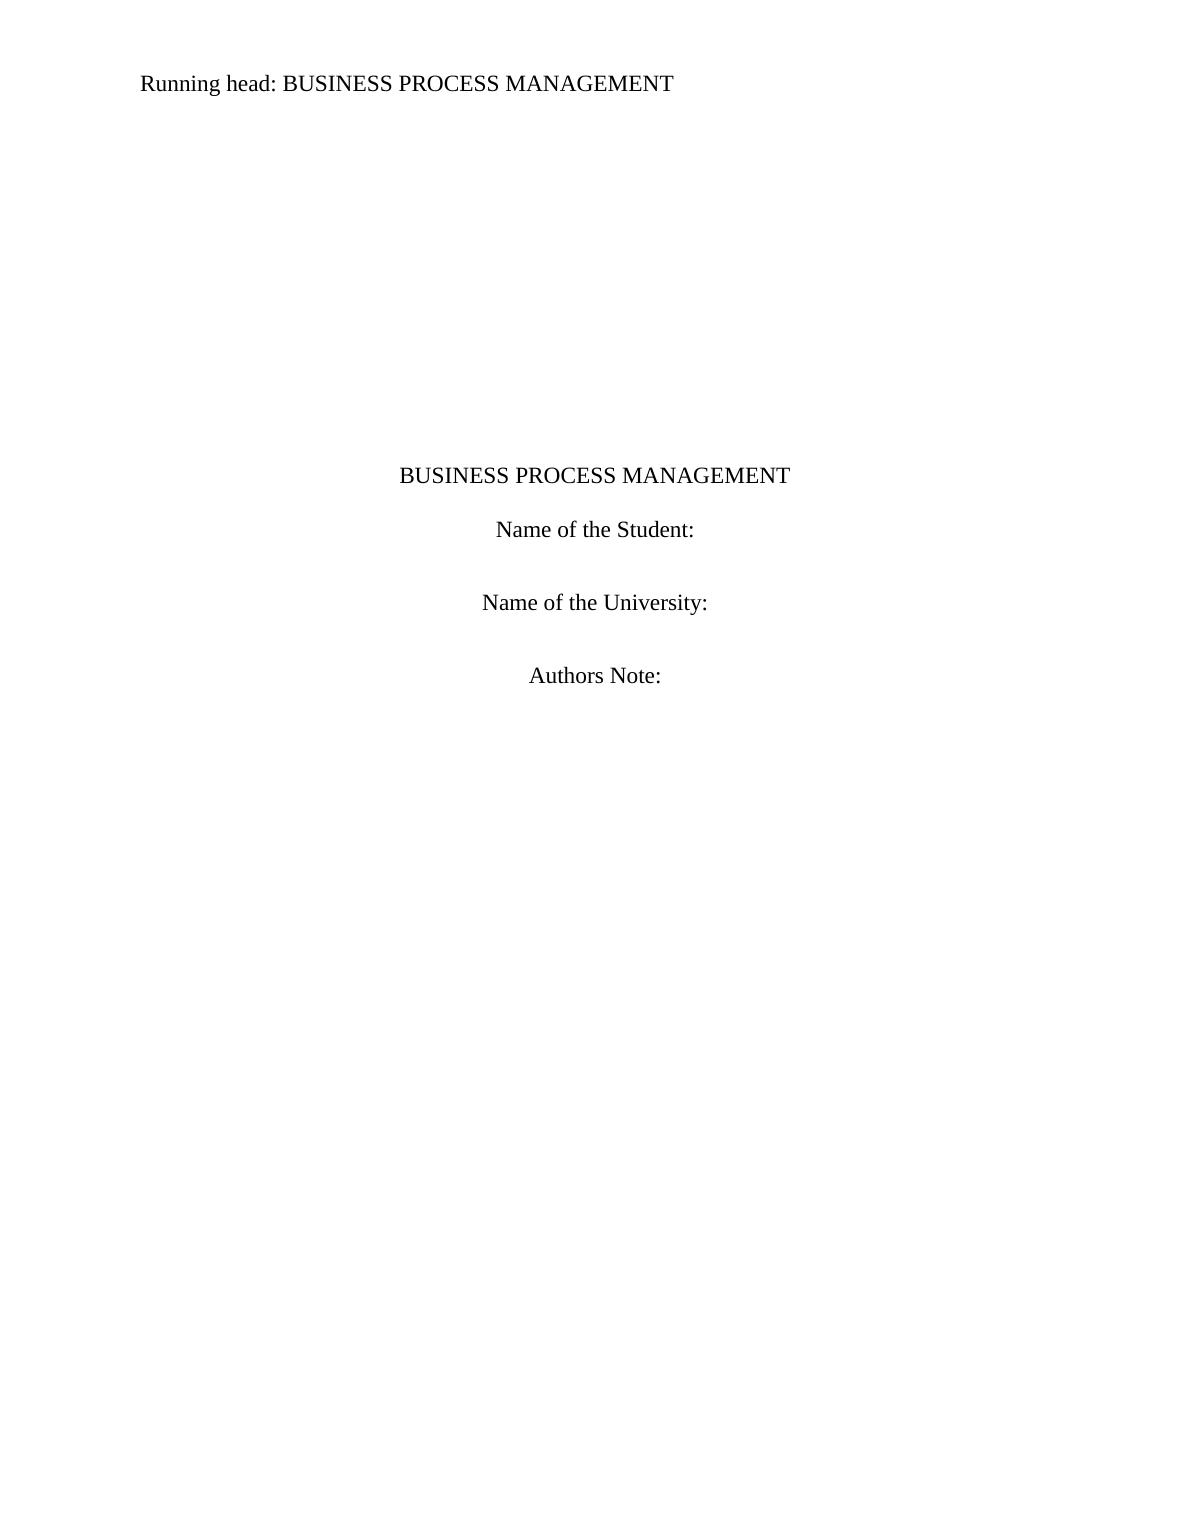 Report on Business Process Management (BPM)_1